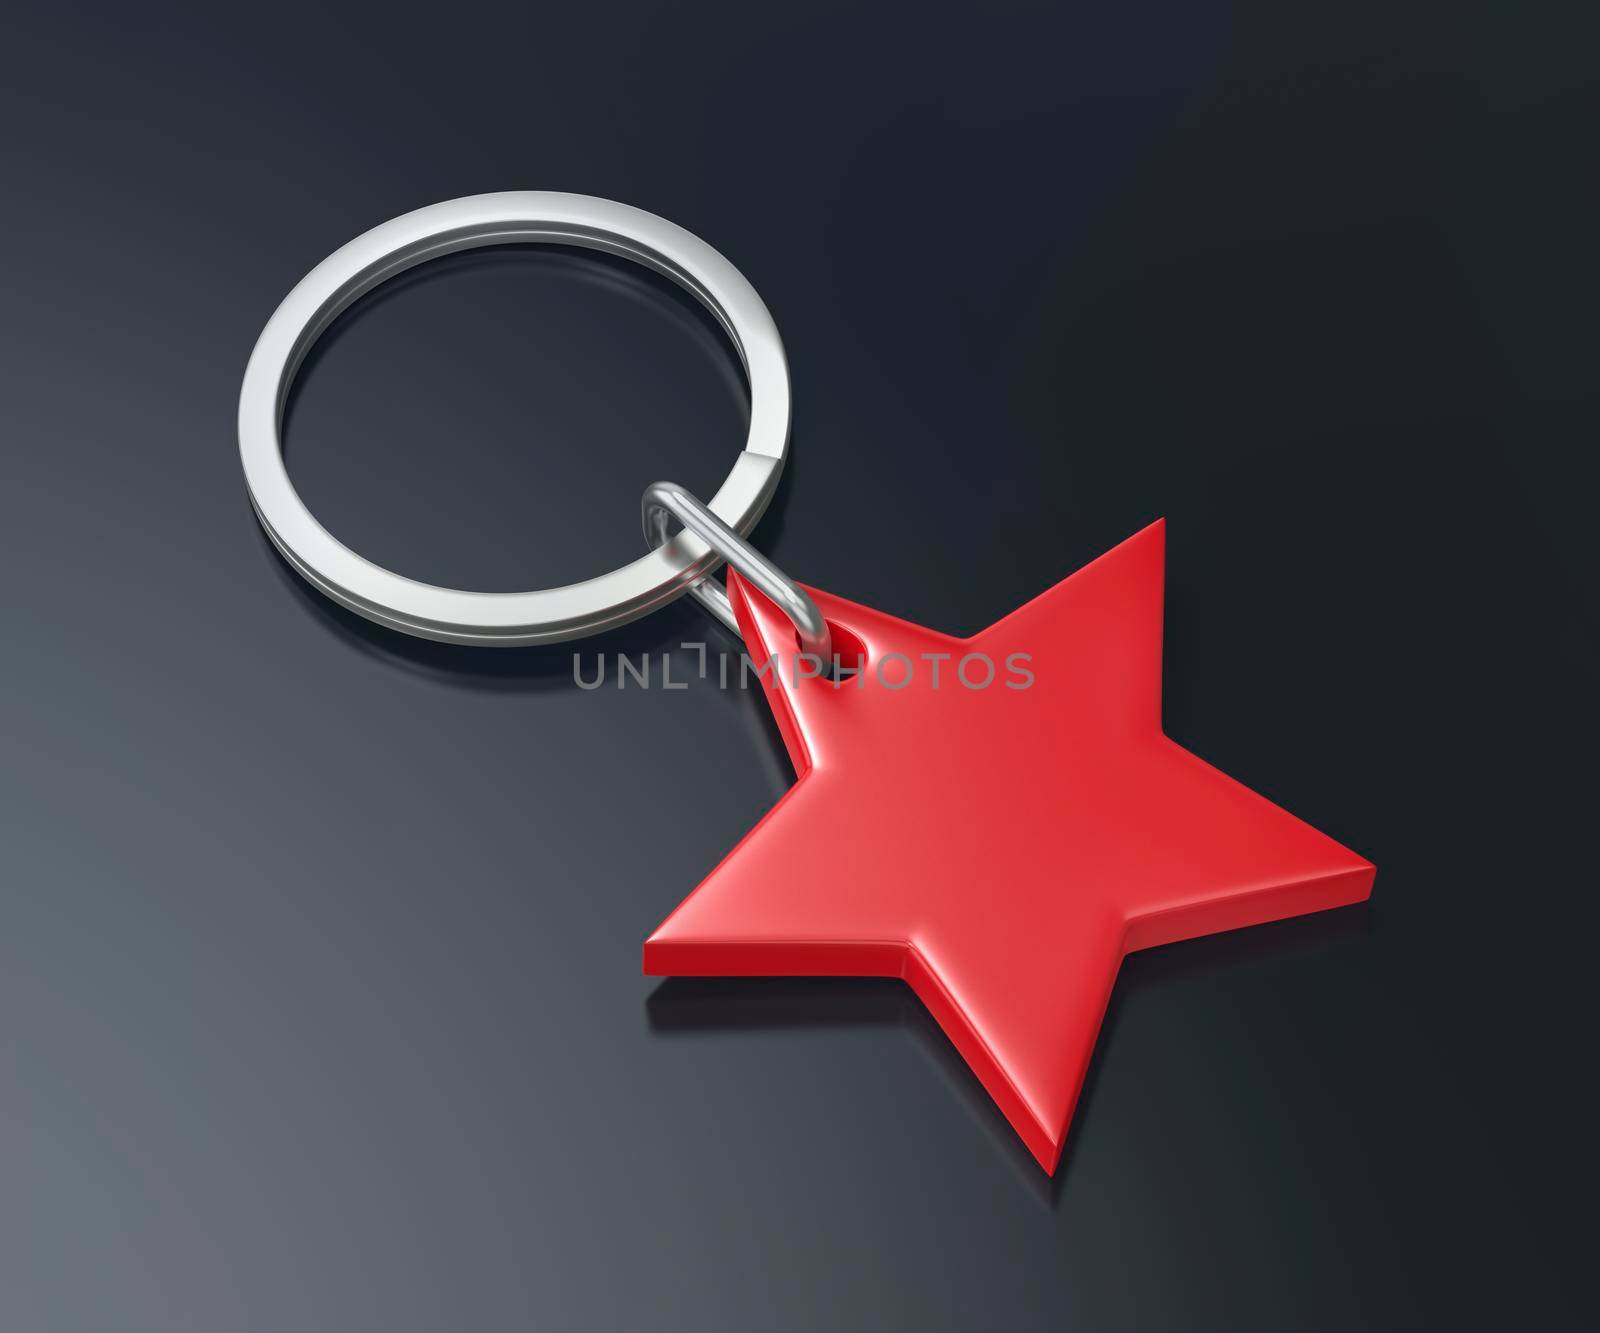 Keyring with shiny red star on dark background